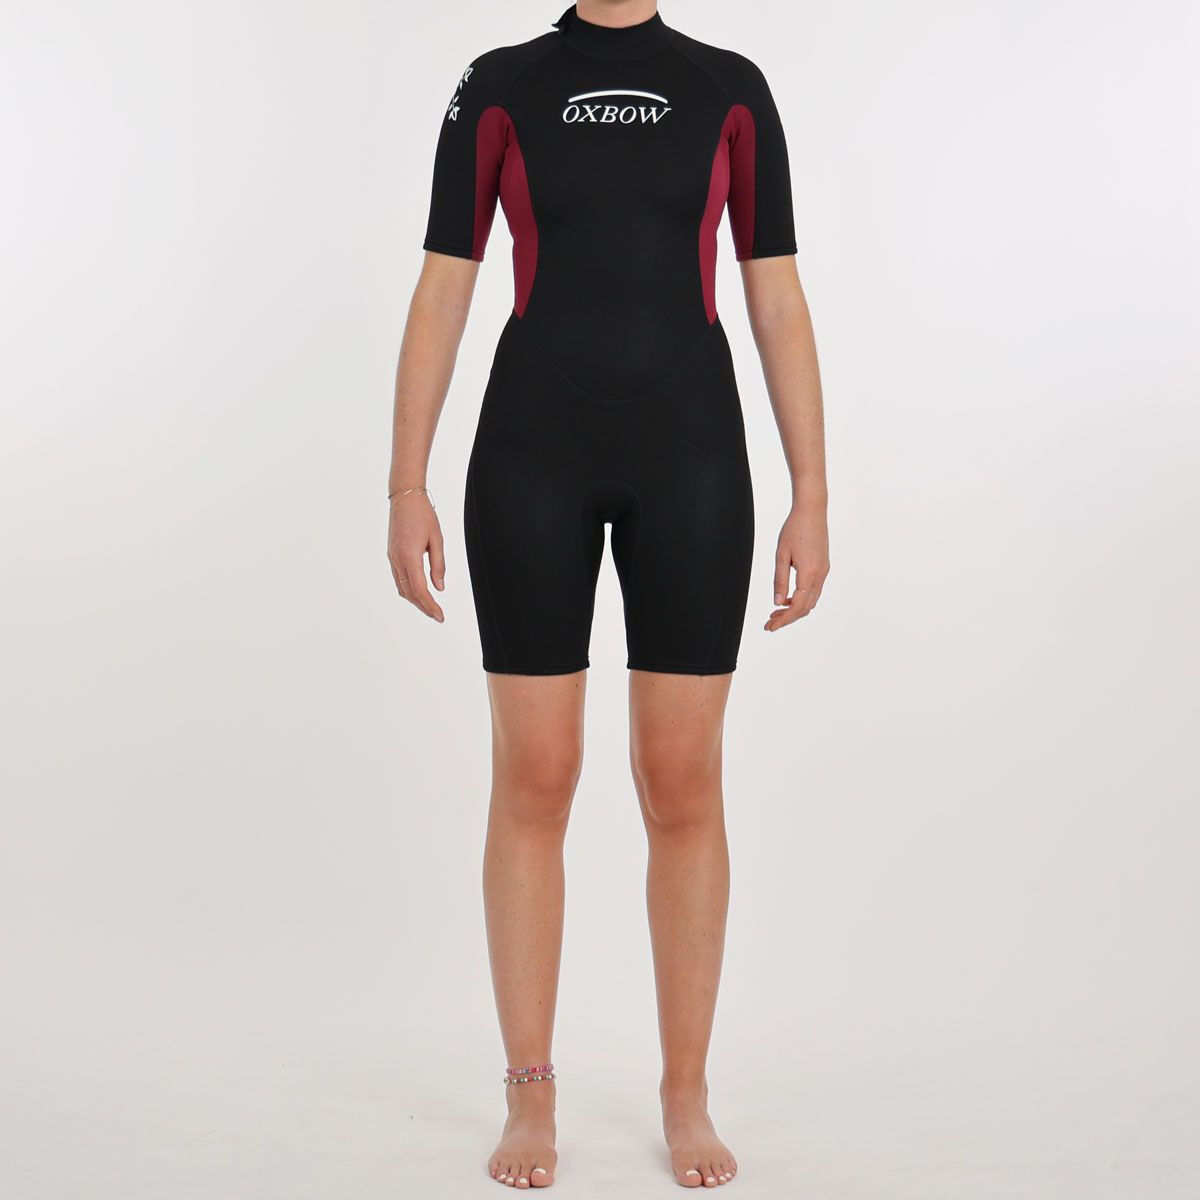 Oxbow Wapiti 2/2 mm Shorty - Surf Wetsuit - Women's | Hardloop